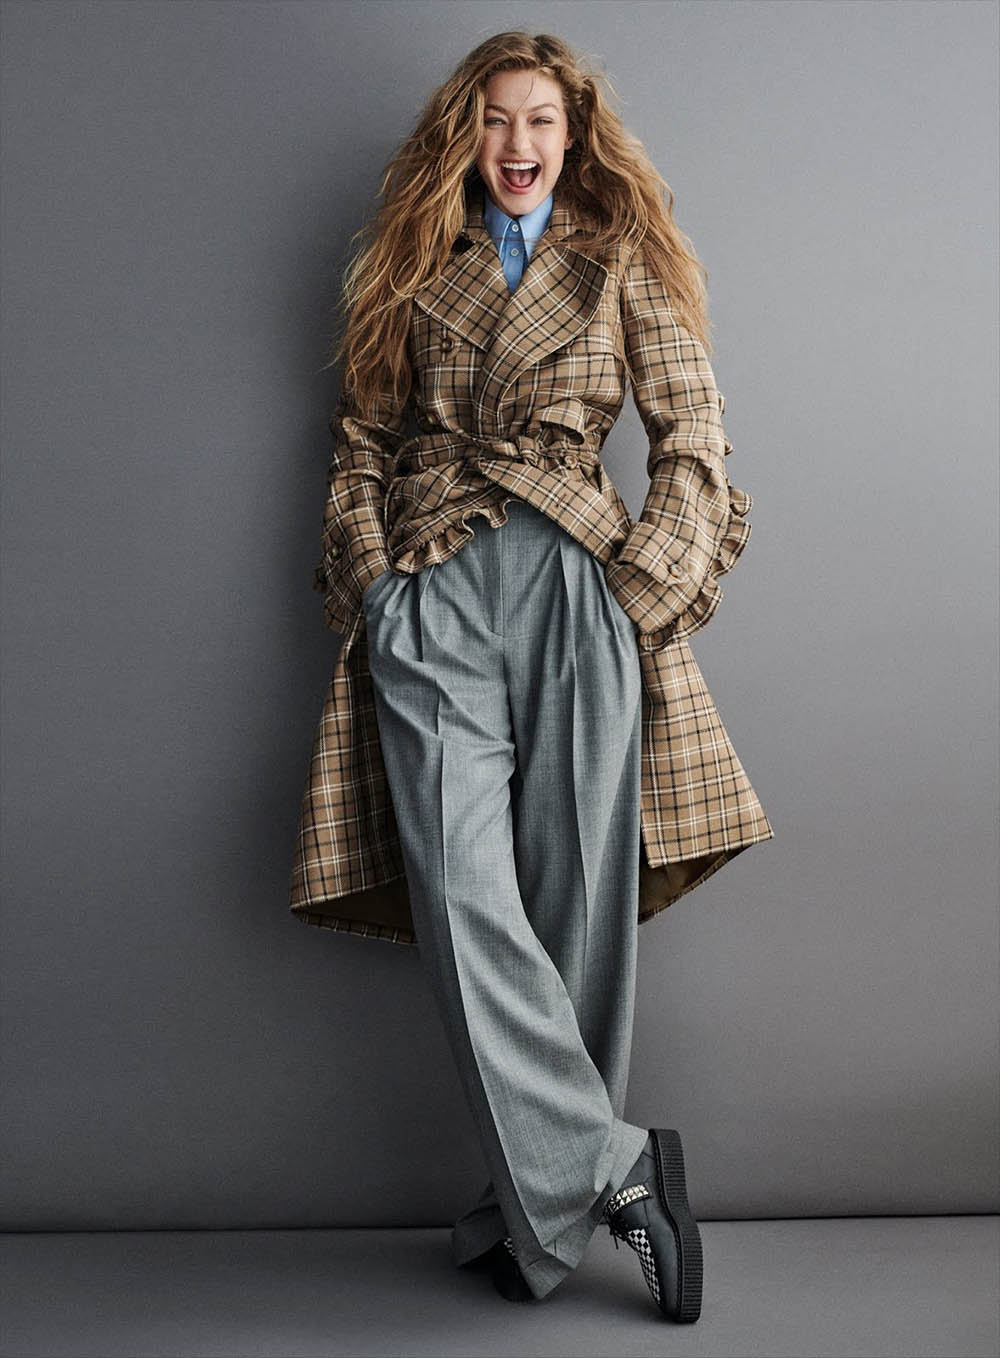 Gigi Hadid covers Vogue Germany November 2019 by Giampaolo Sgura